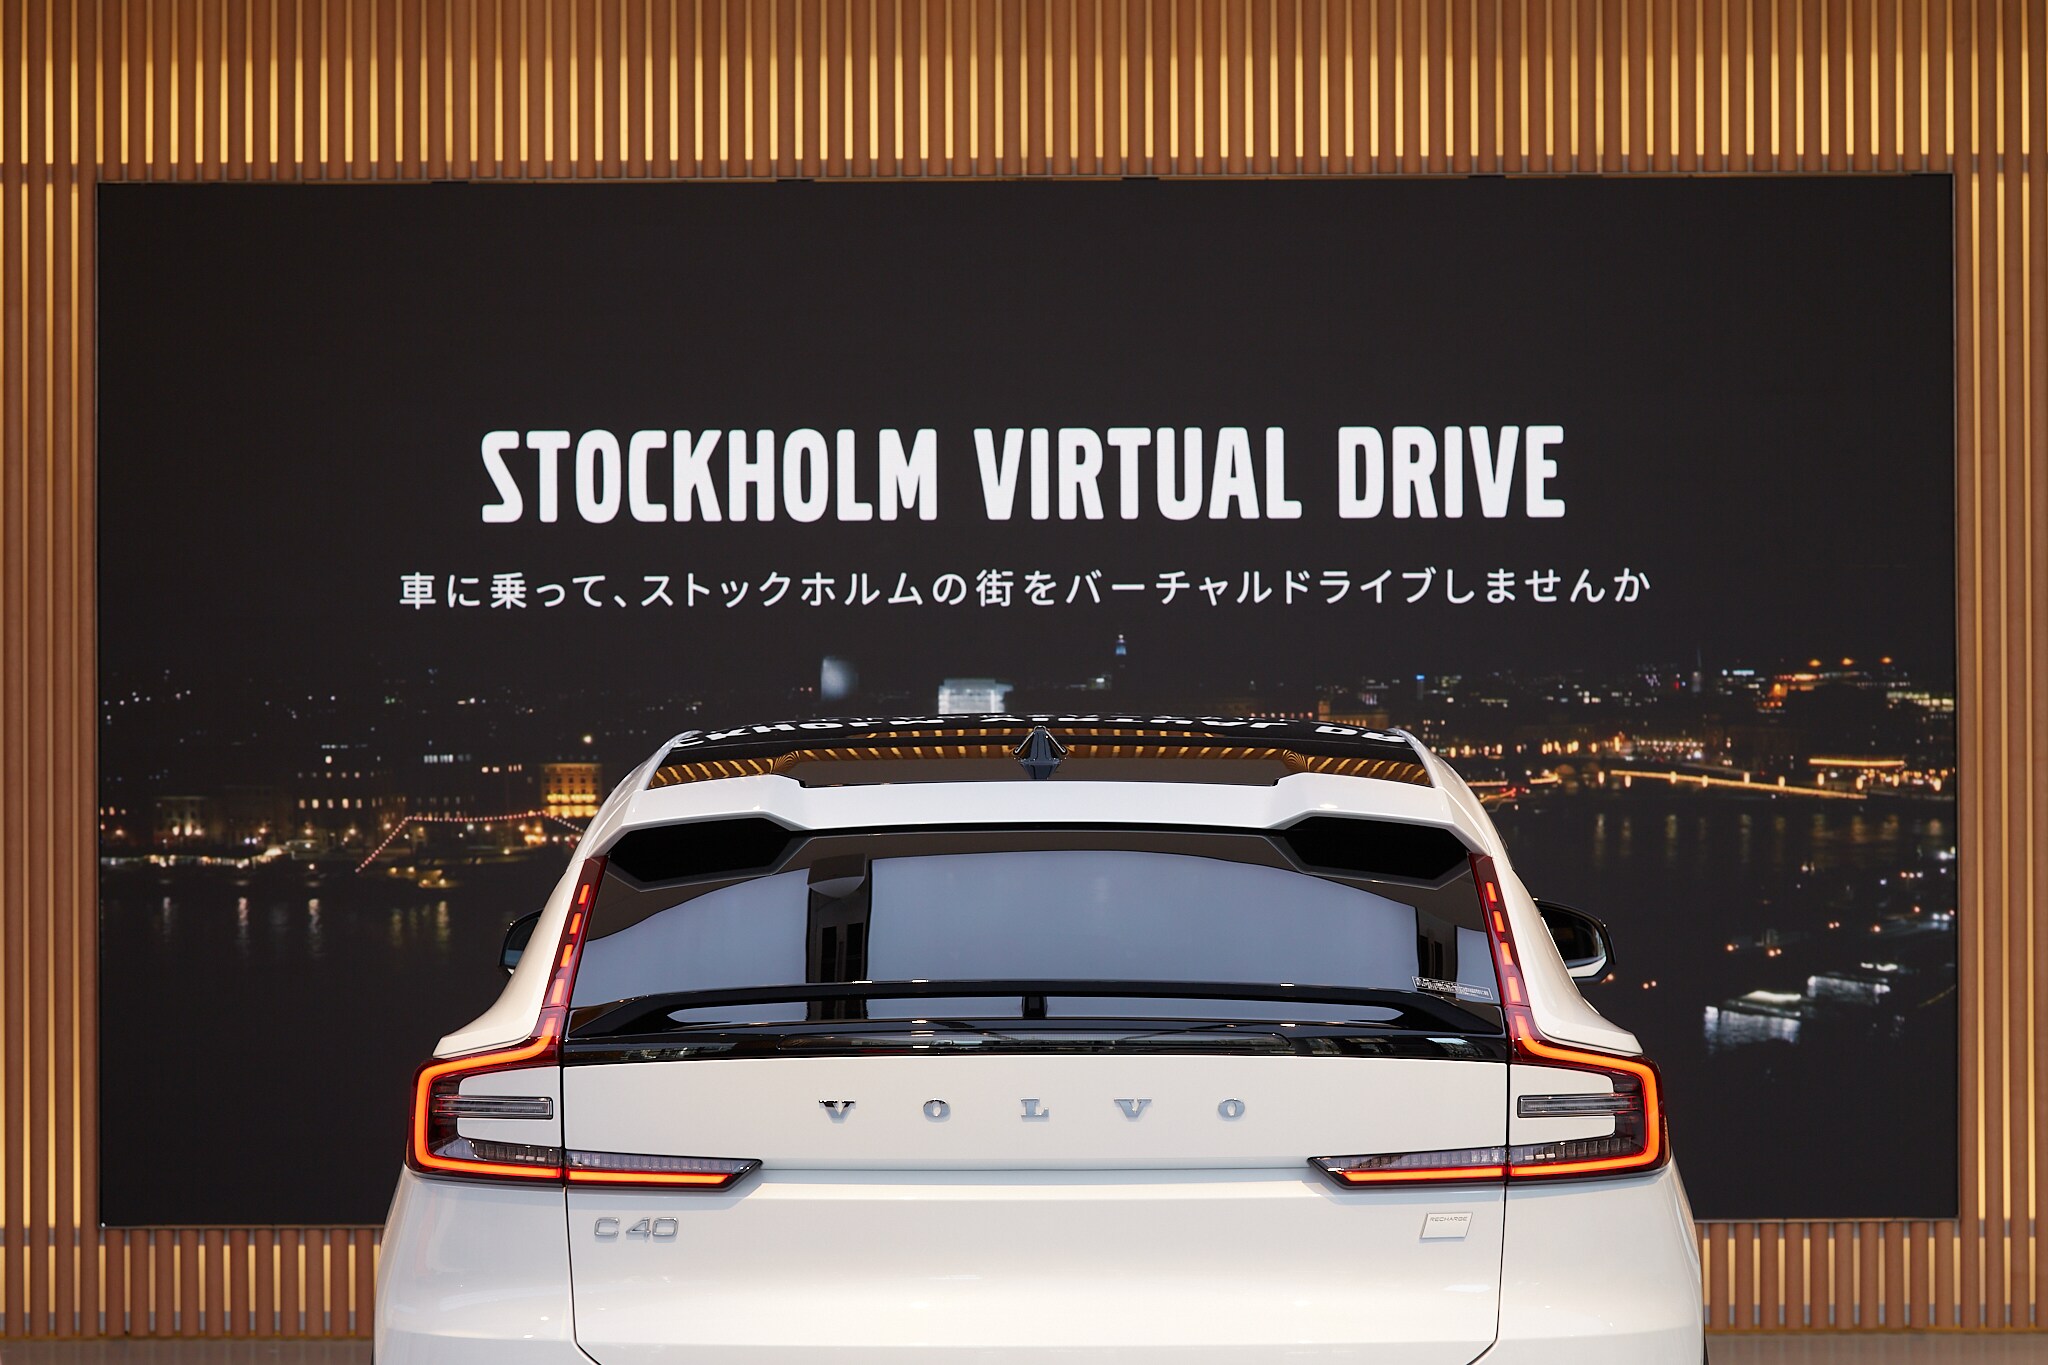 Stockholm Virtual Drive